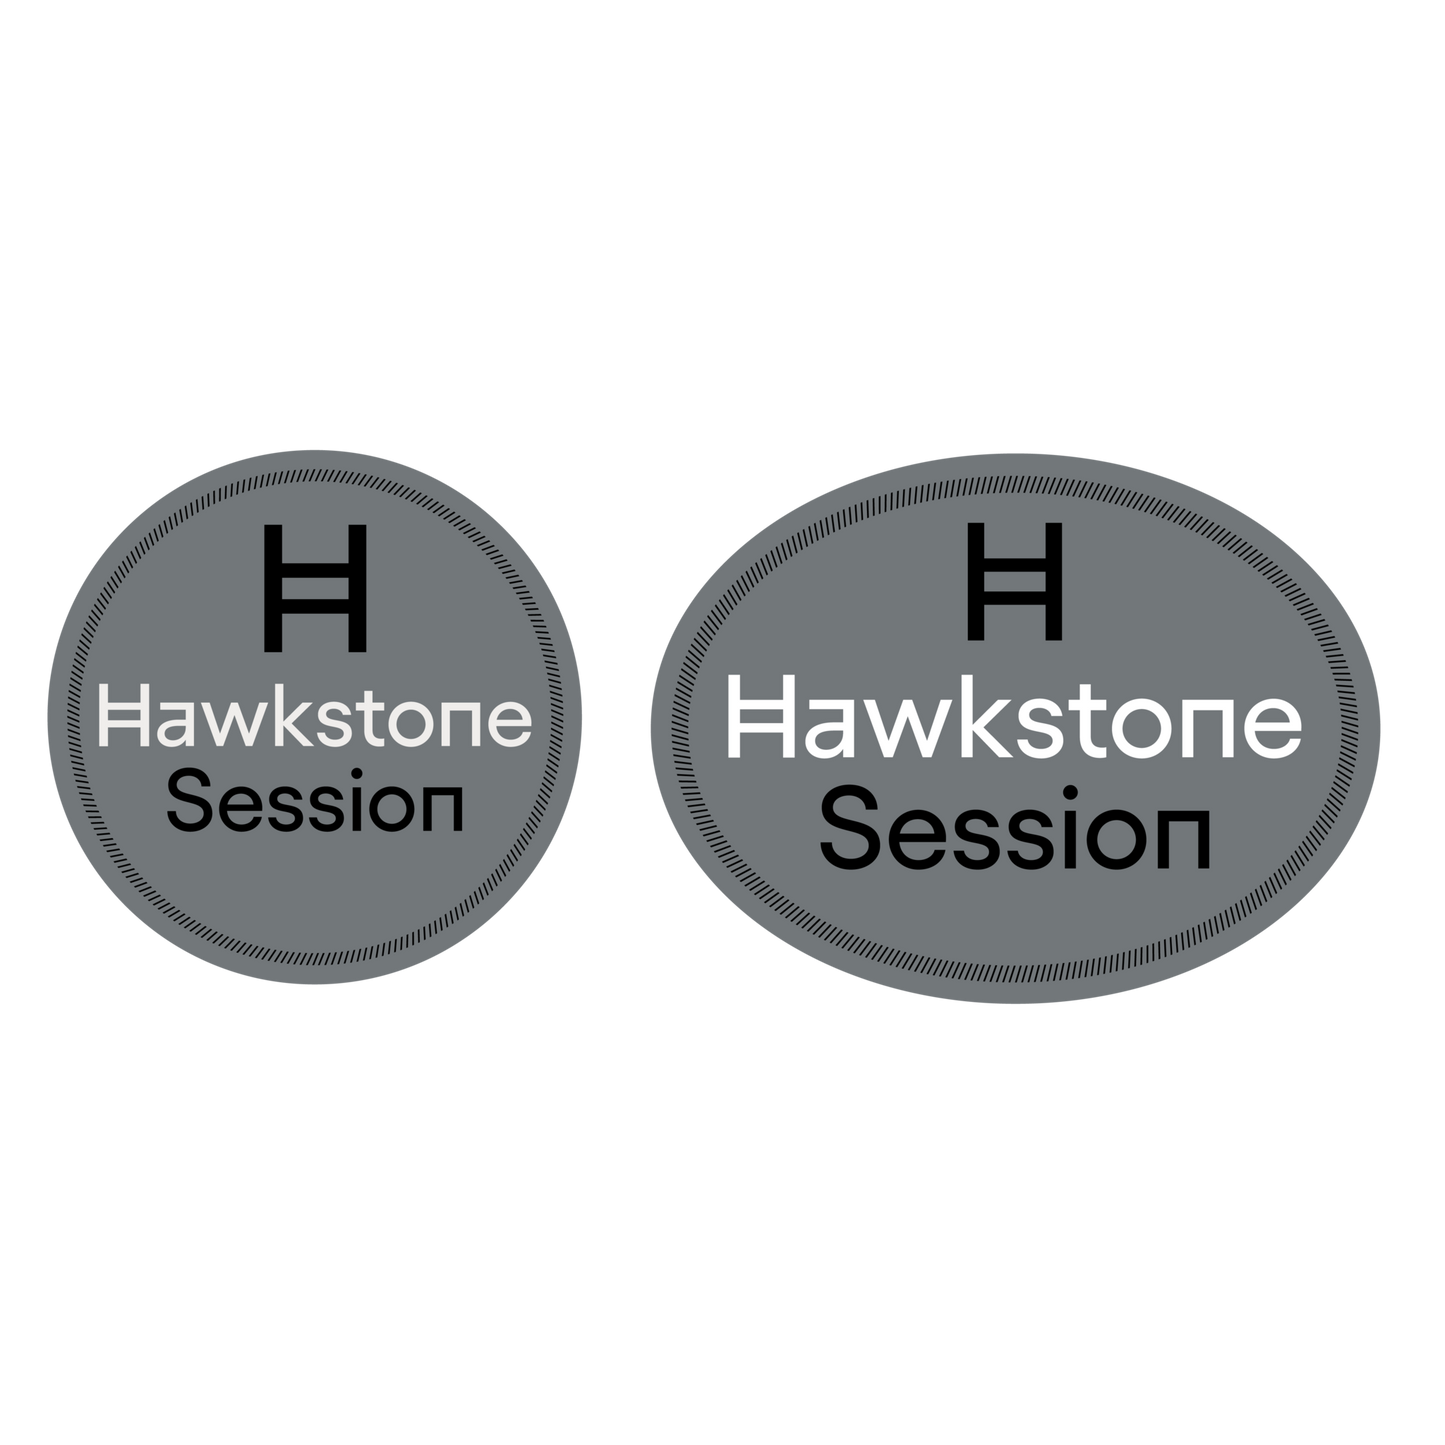 Hawkstone Session lens 